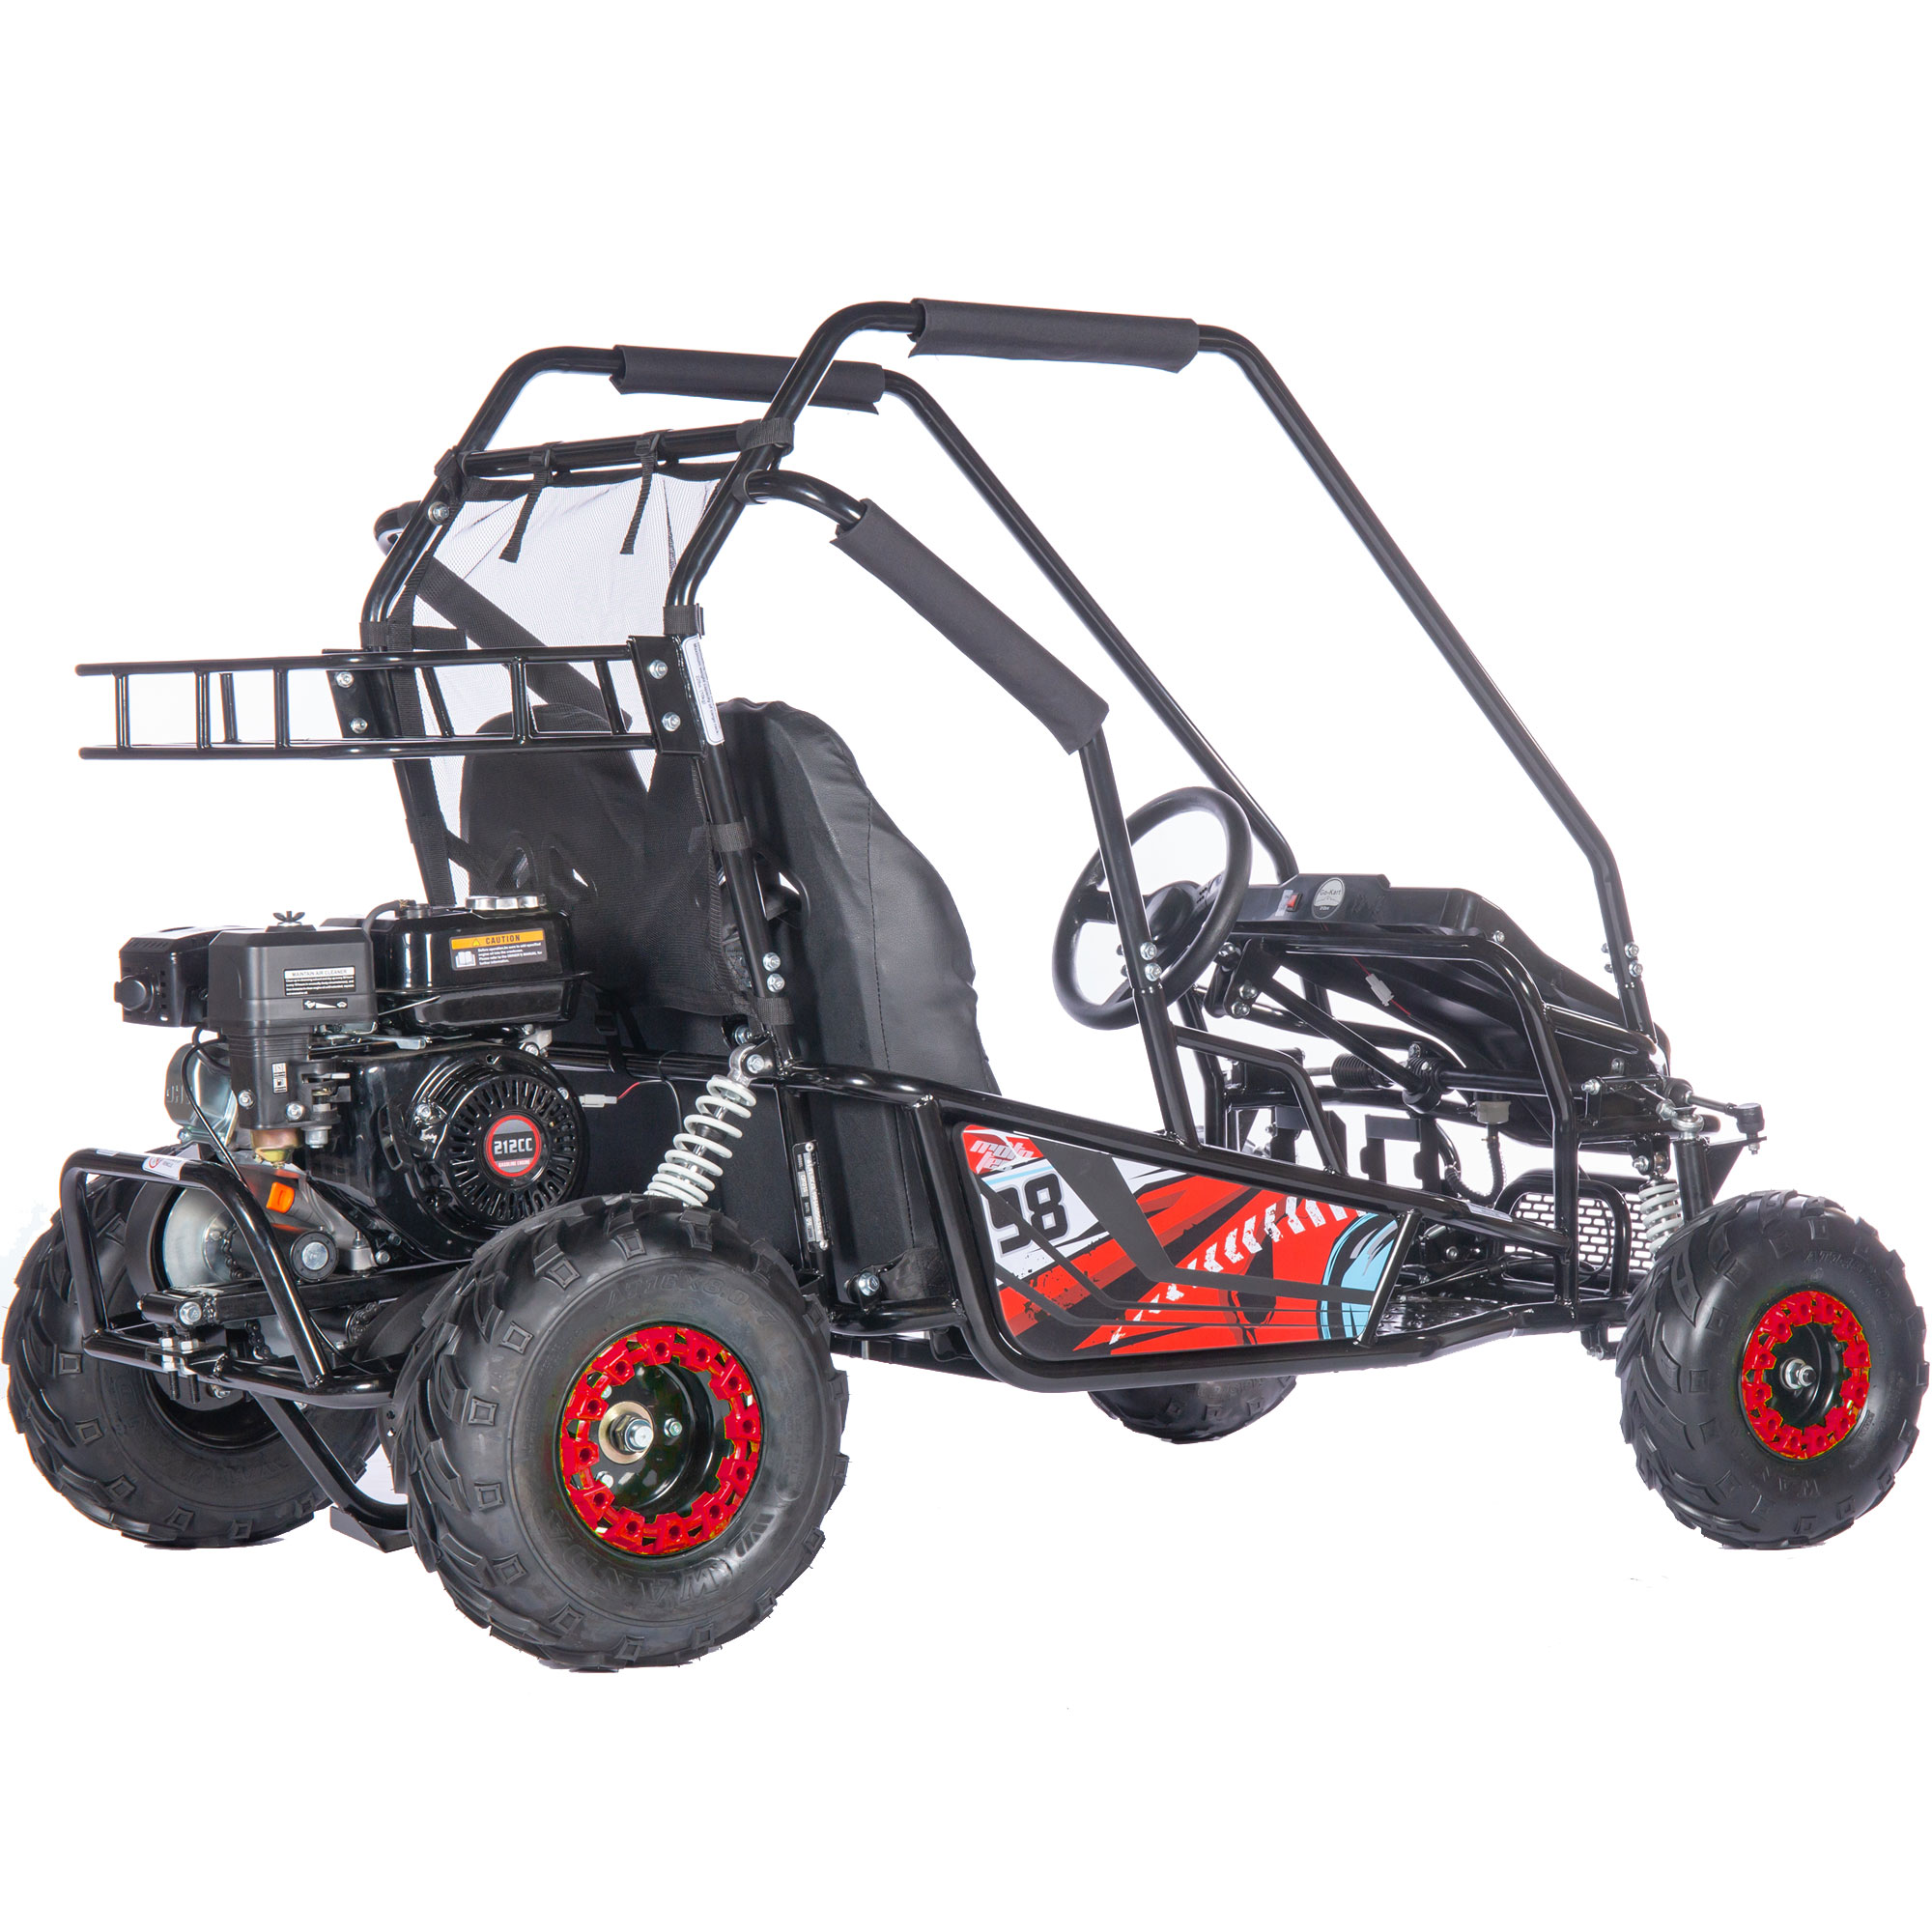 MotoTec Mud Monster XL 212cc 2 Seat Go Kart Full Suspension Red - image 3 of 8